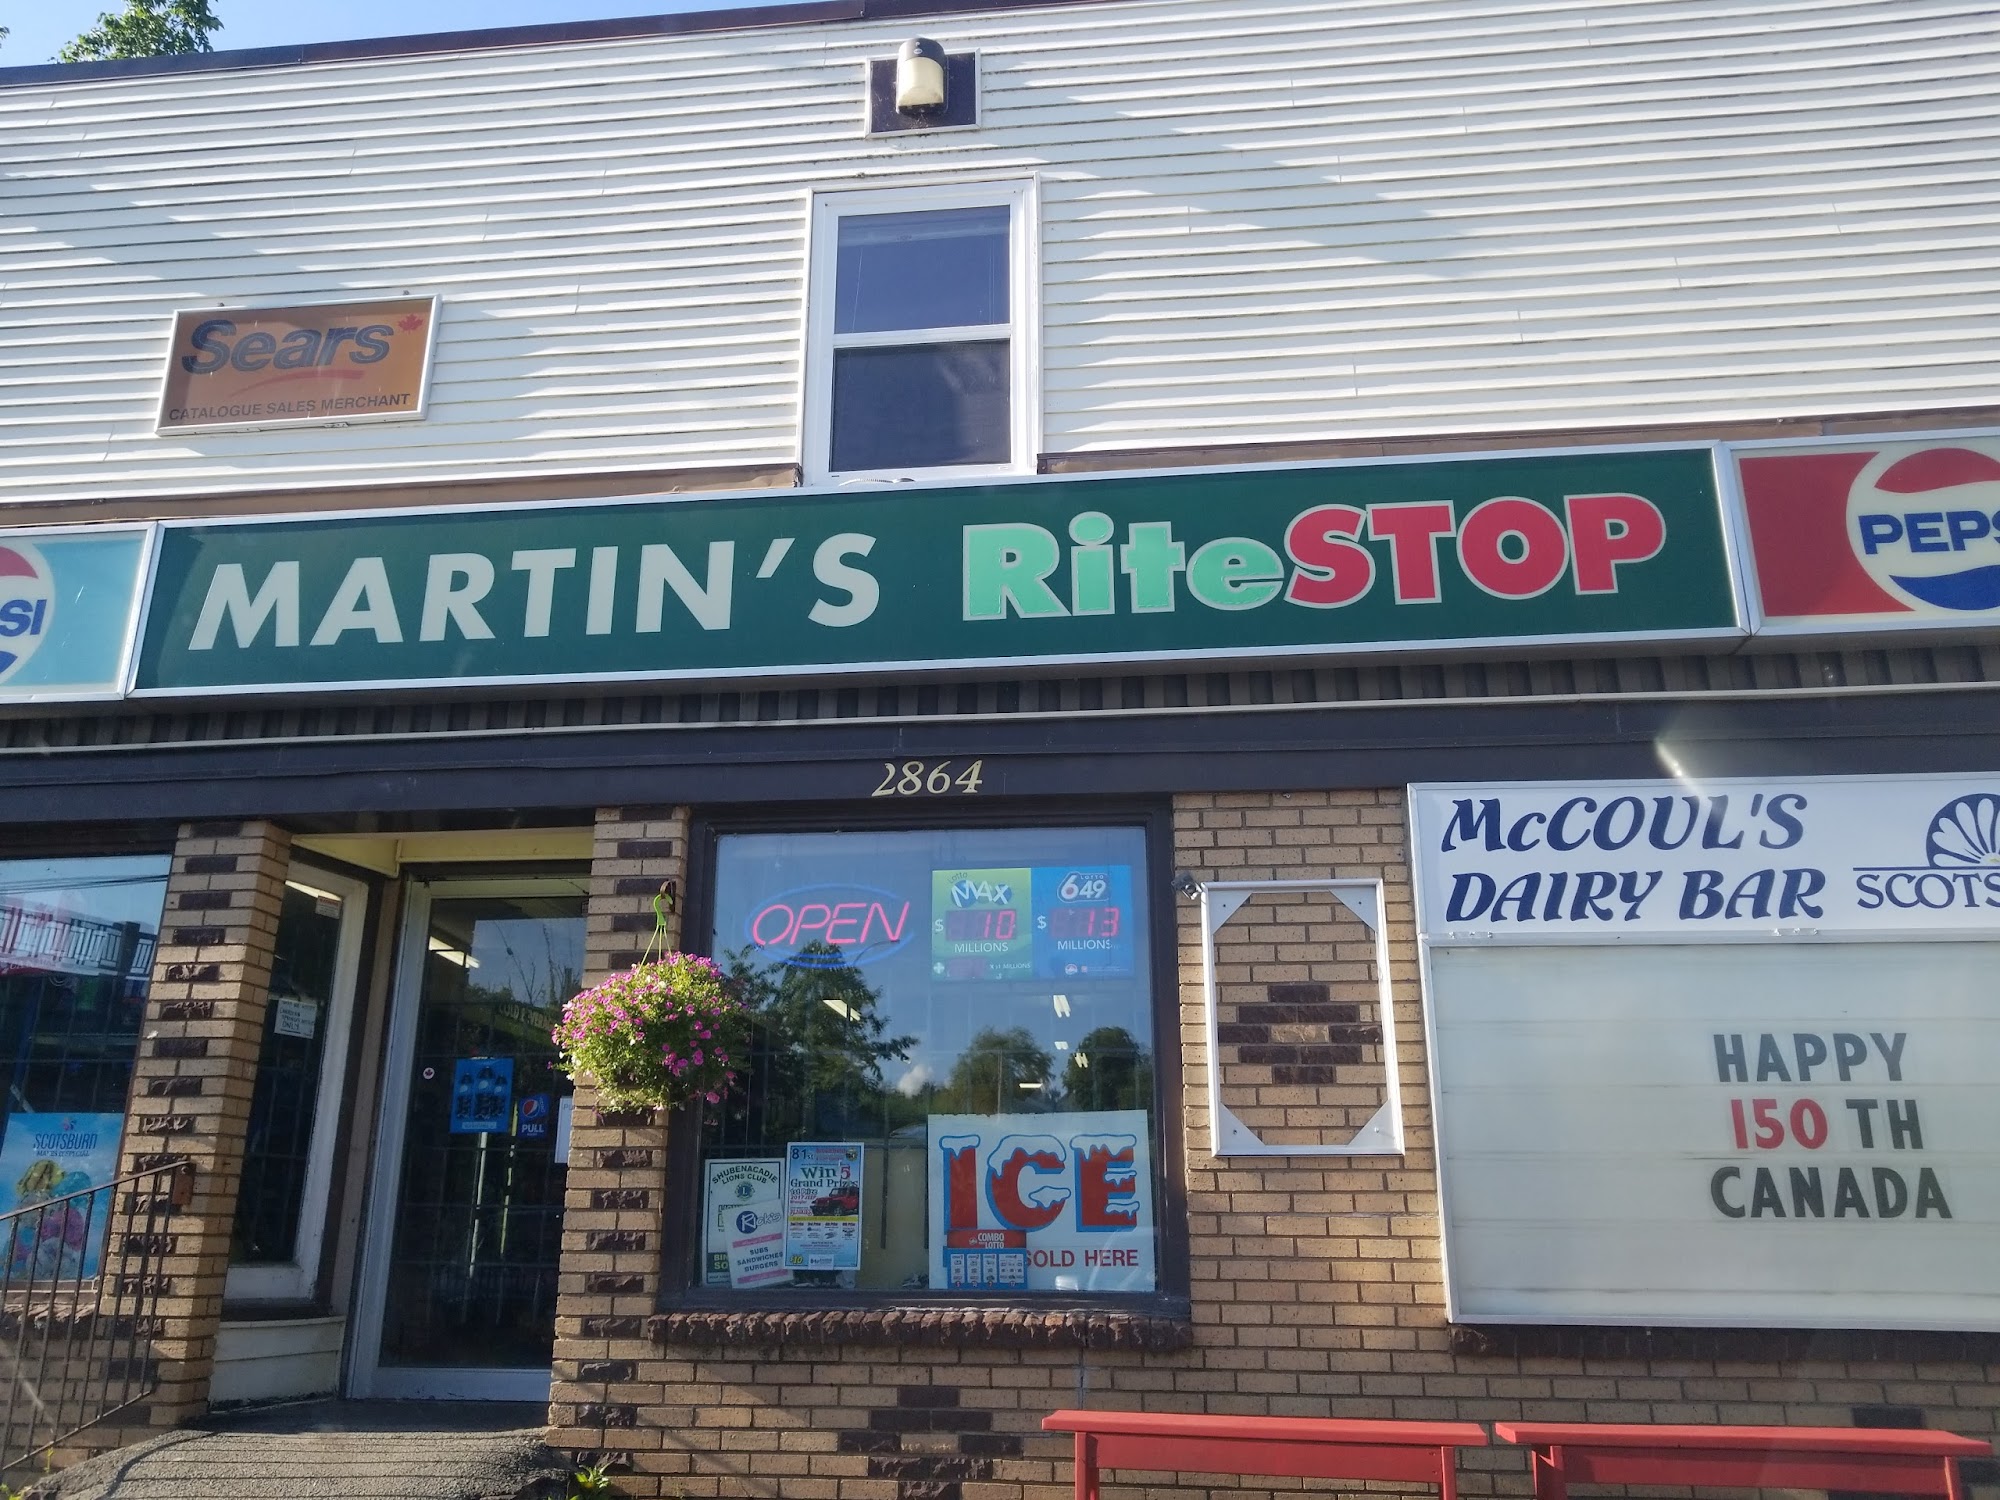 Martin's Ritestop